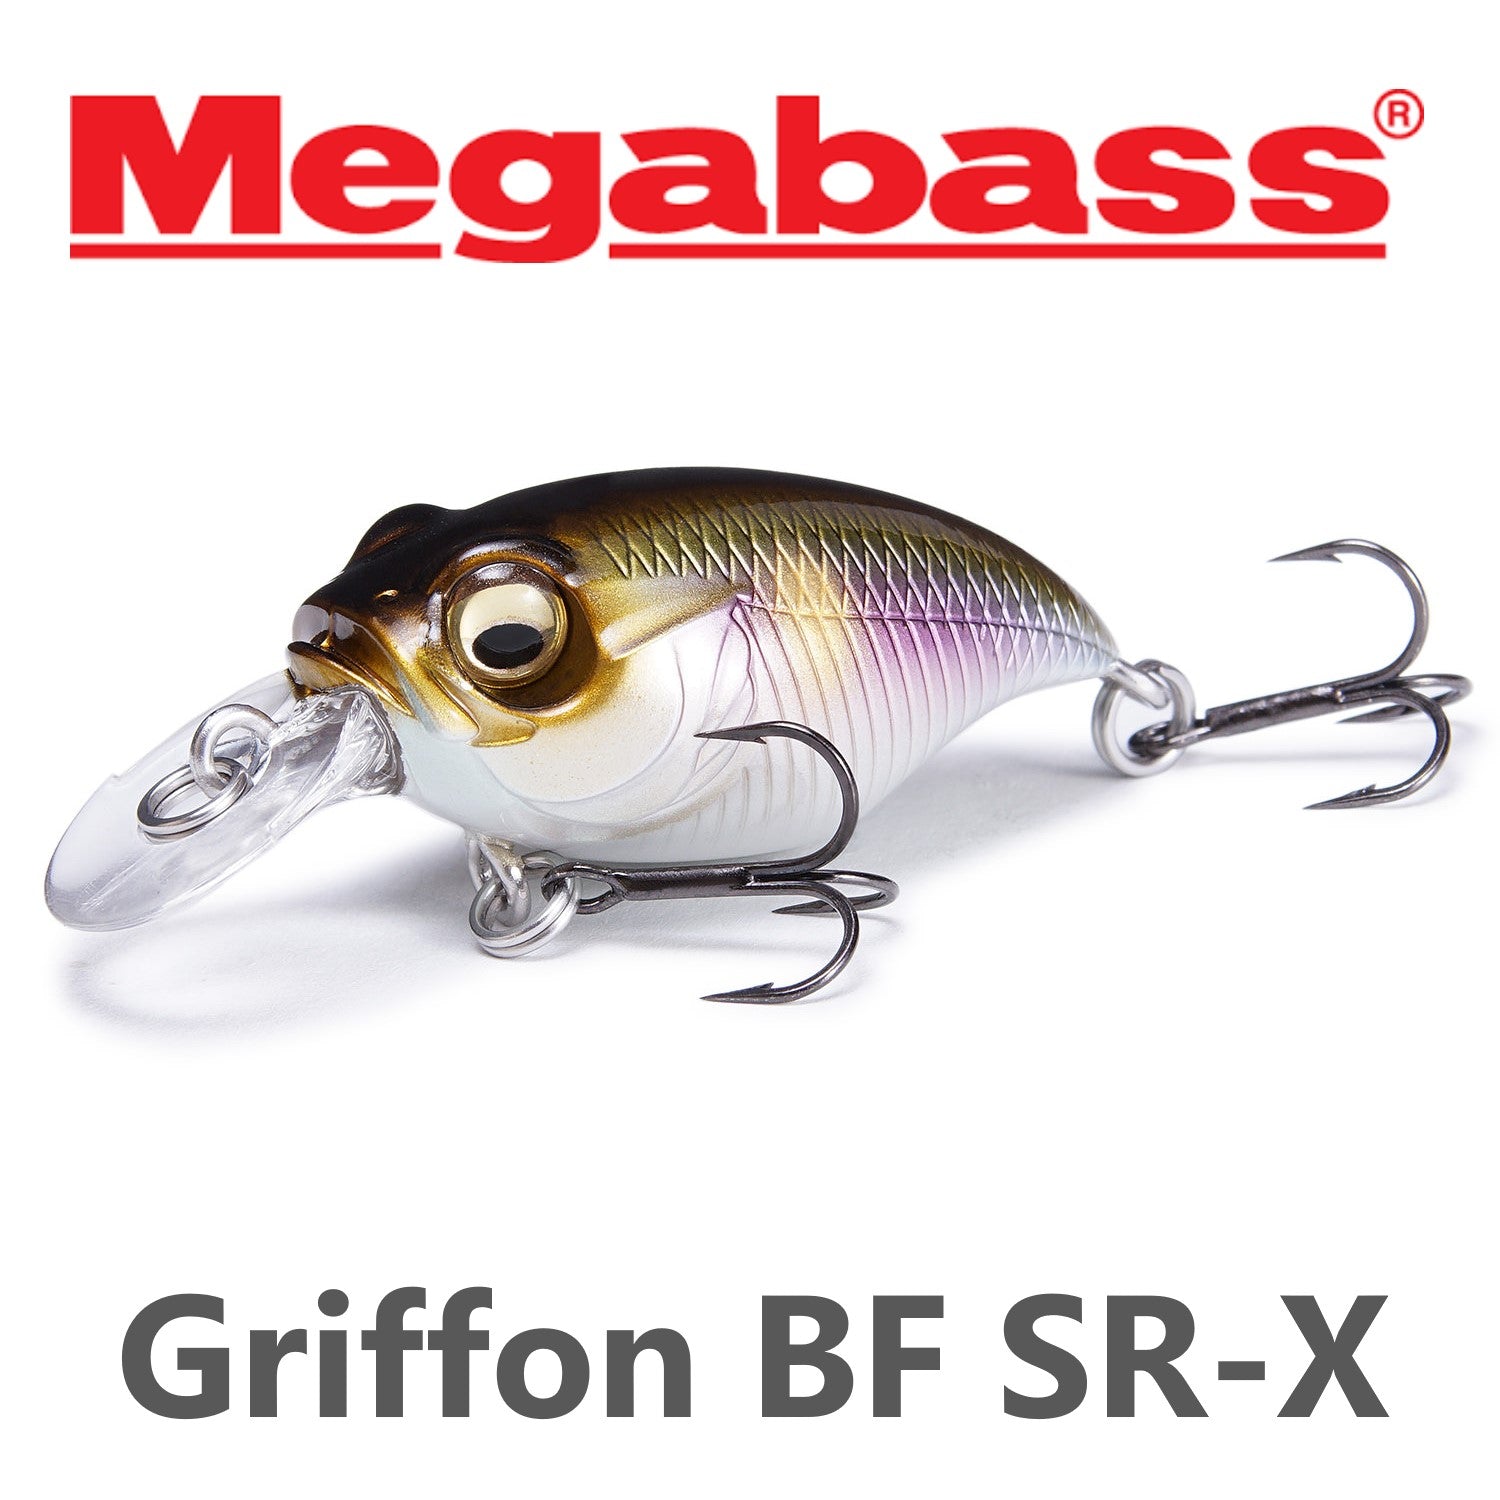 Megabass Griffon BF SR-X